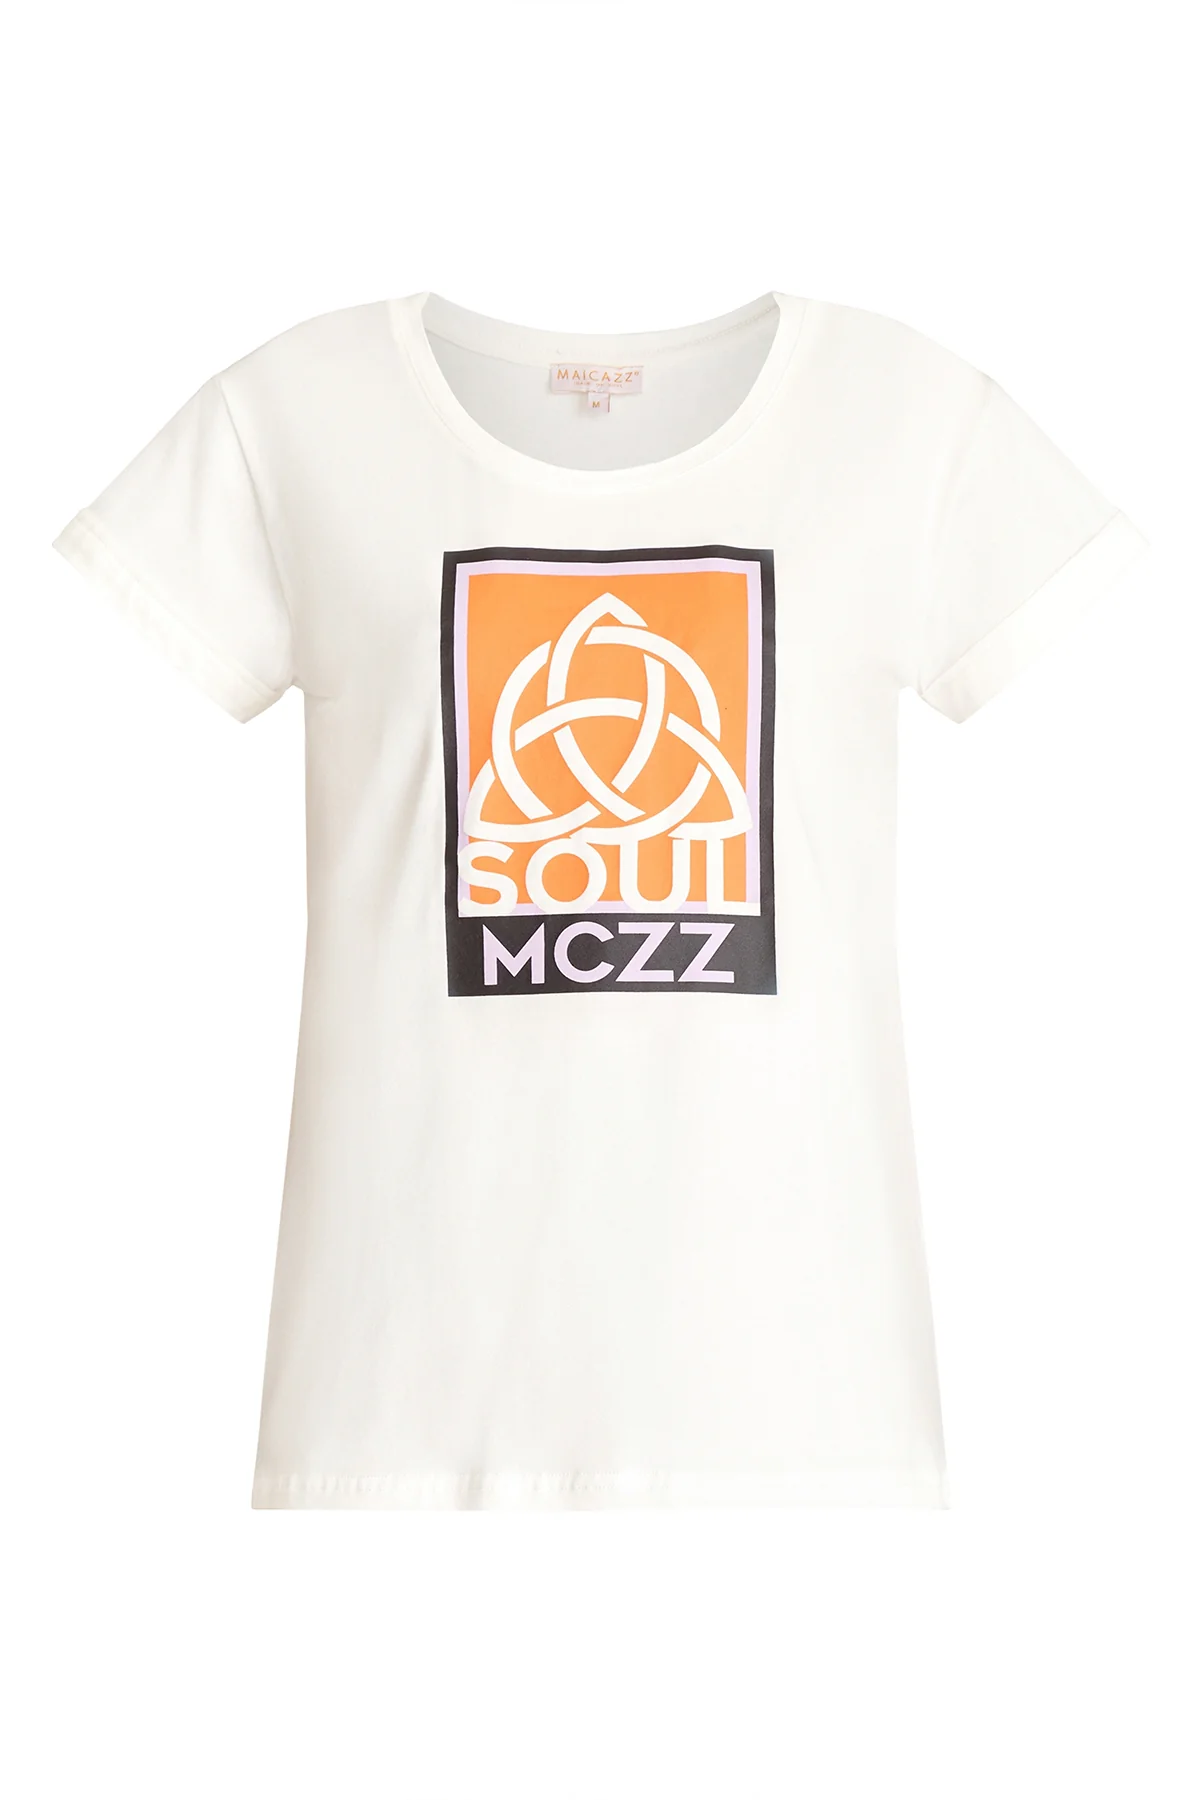 Maicazz Shirt ine sp24.75.030 peachy